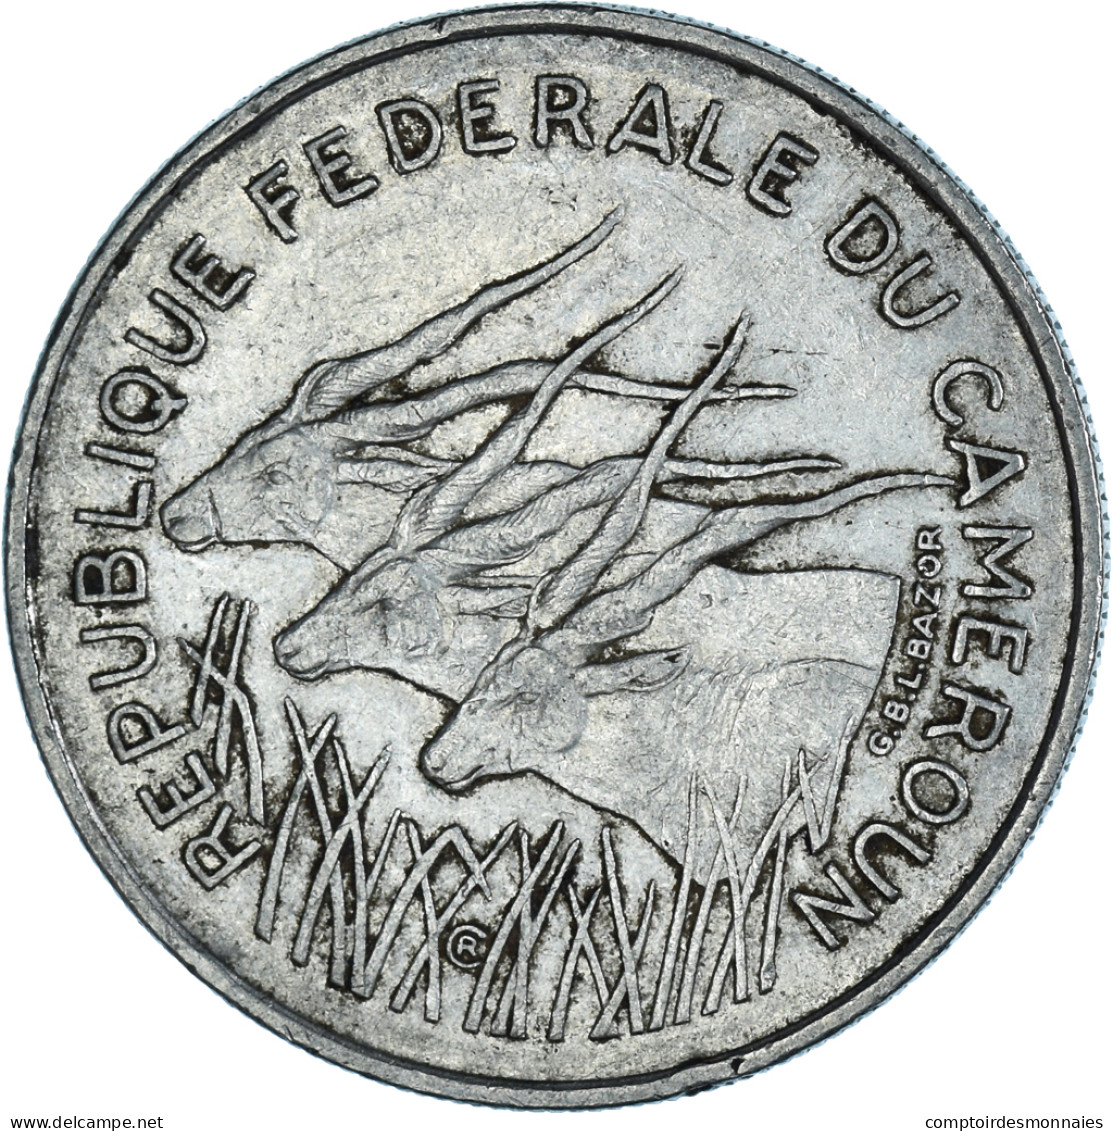 Monnaie, Cameroun, 100 Francs, 1971, TTB, Nickel, KM:15 - Cameroon